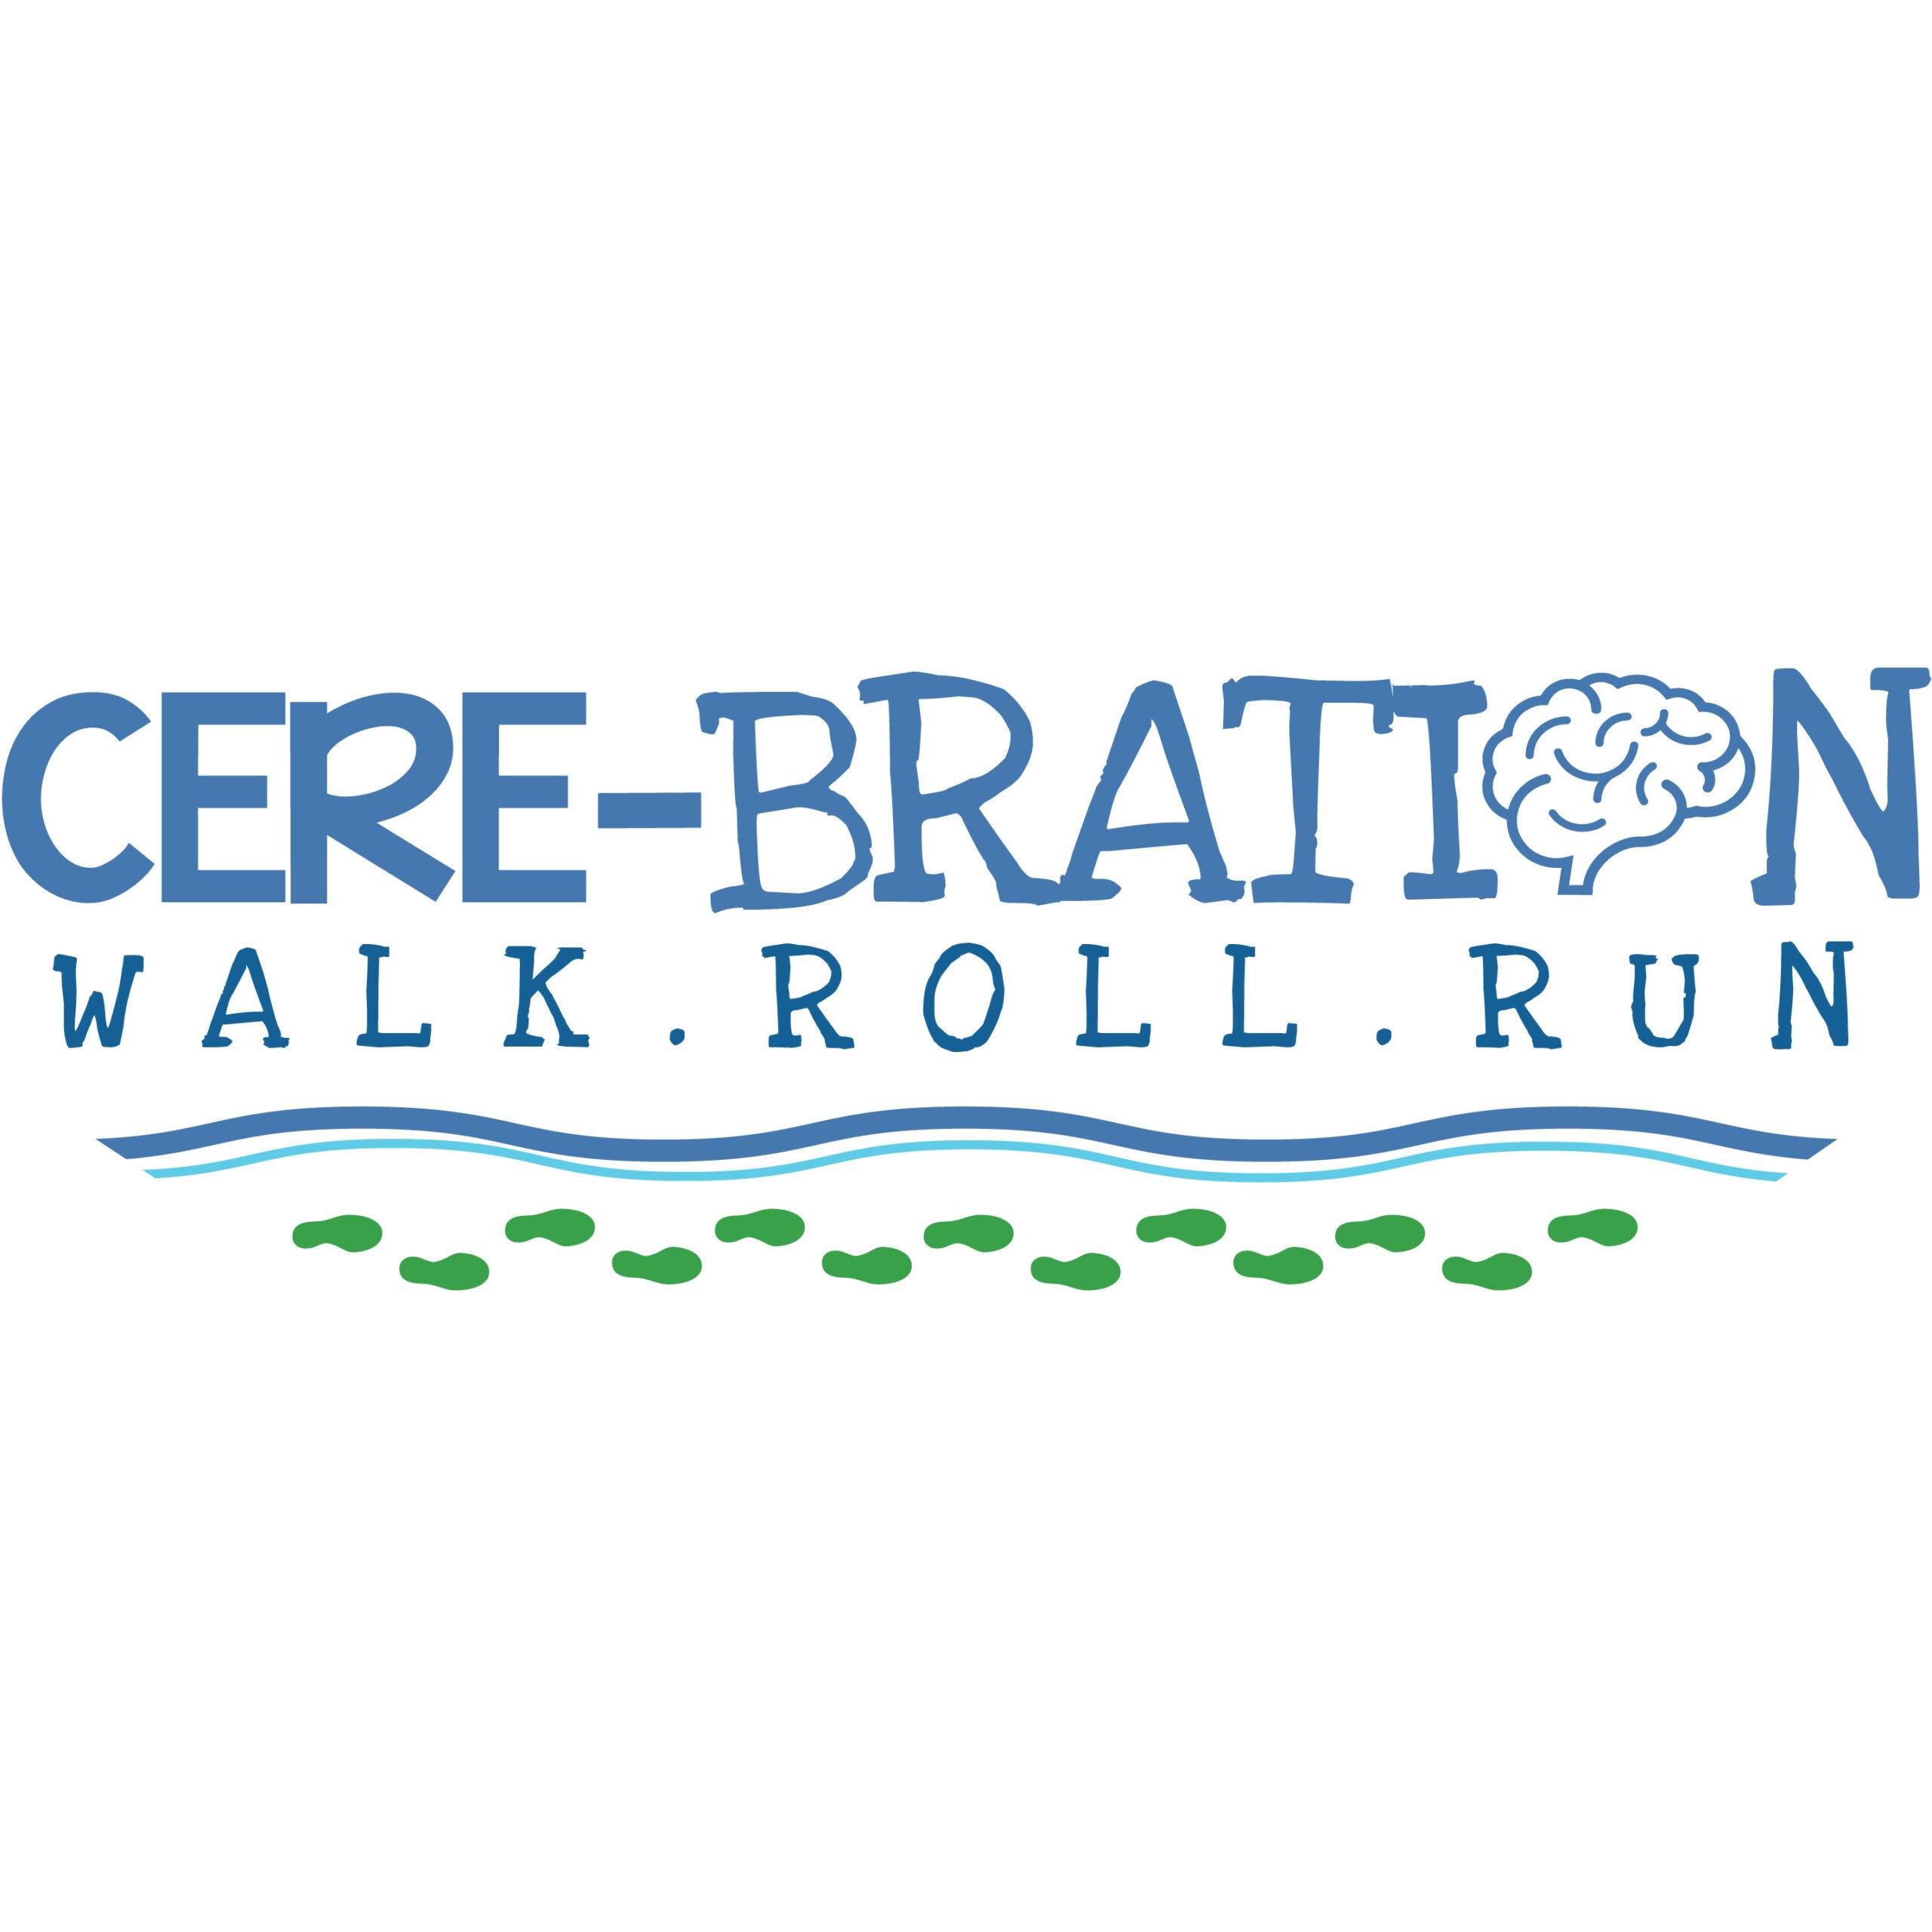 Cerebration 1 Mile and 5k Run Walk - Ohio - Brain Injury Association of Ohio